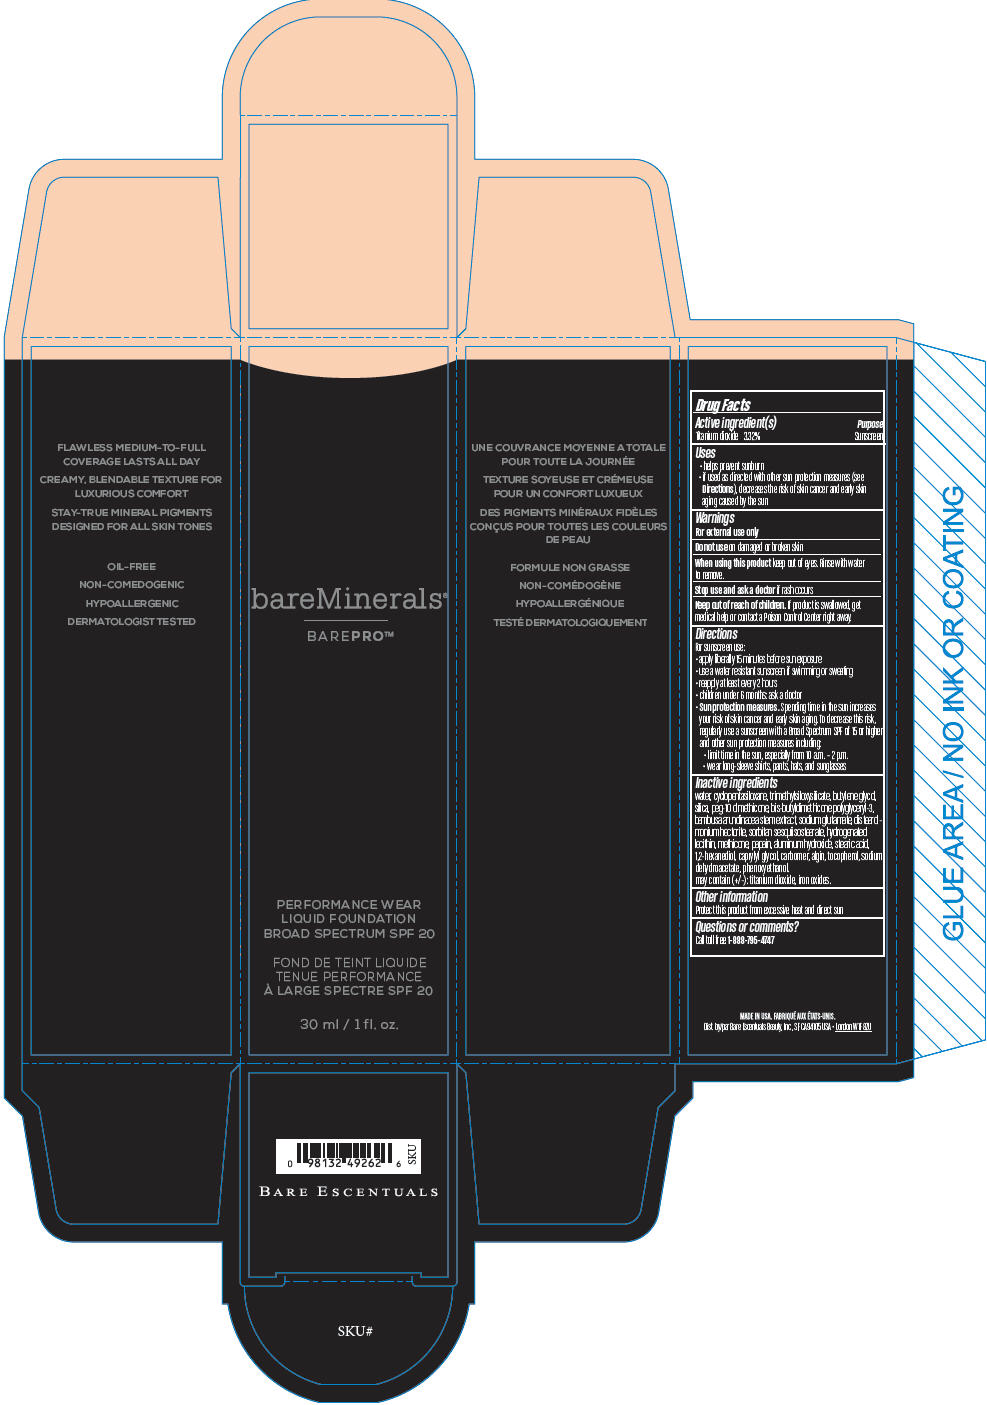 PRINCIPAL DISPLAY PANEL - 30 ml Bottle Carton - Sandalwood 15